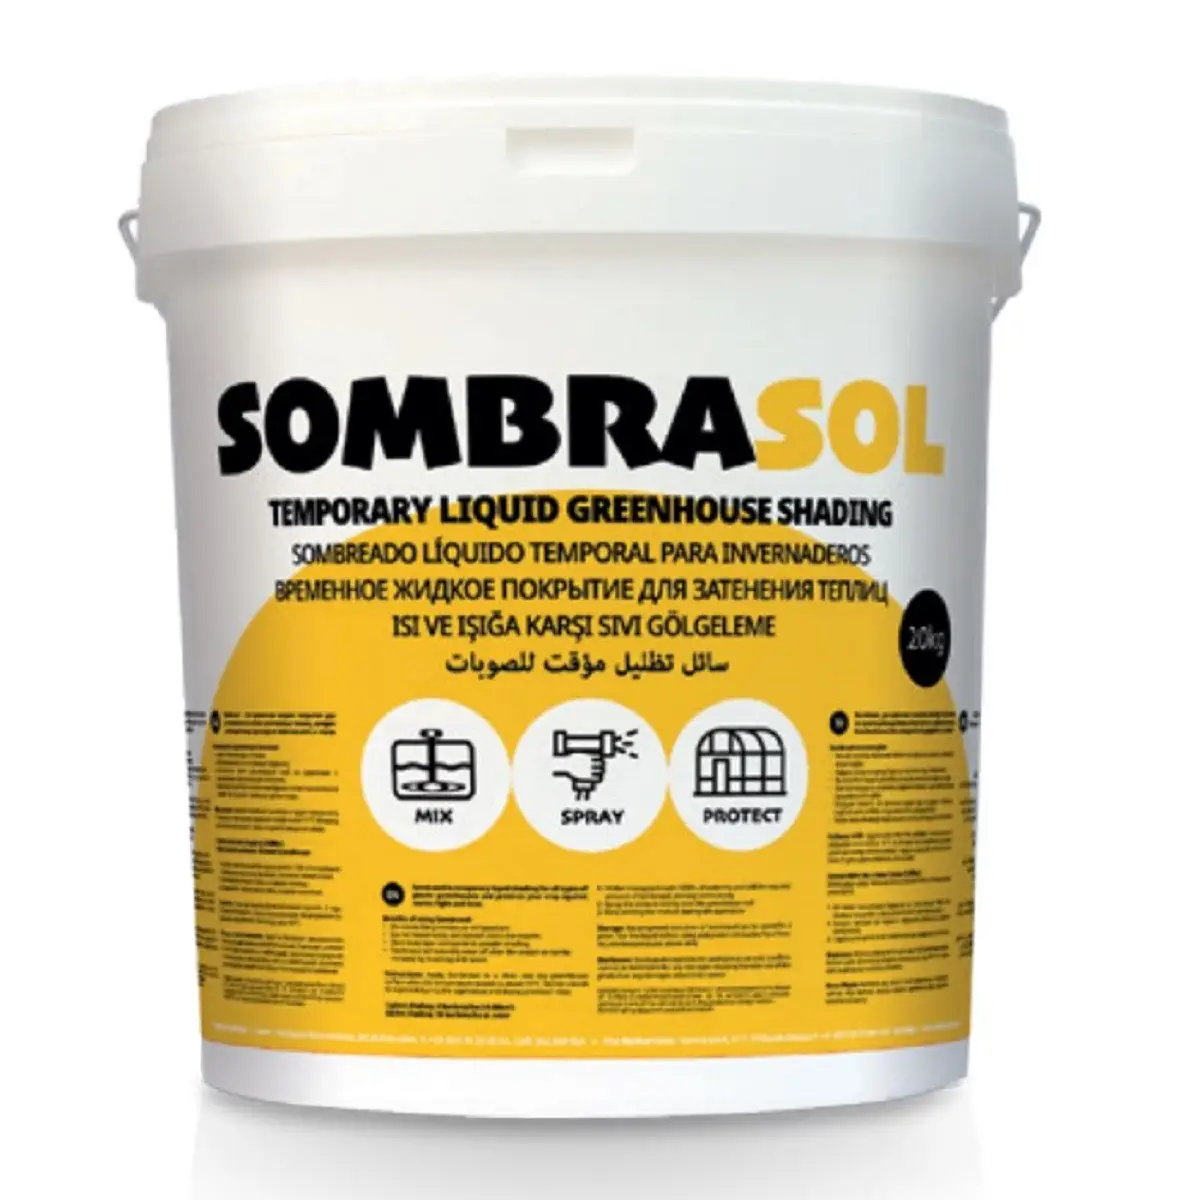 Фарба для затінення теплиць Сомбрасоль (Sombrasol) / 20 л - 2500 м.кв